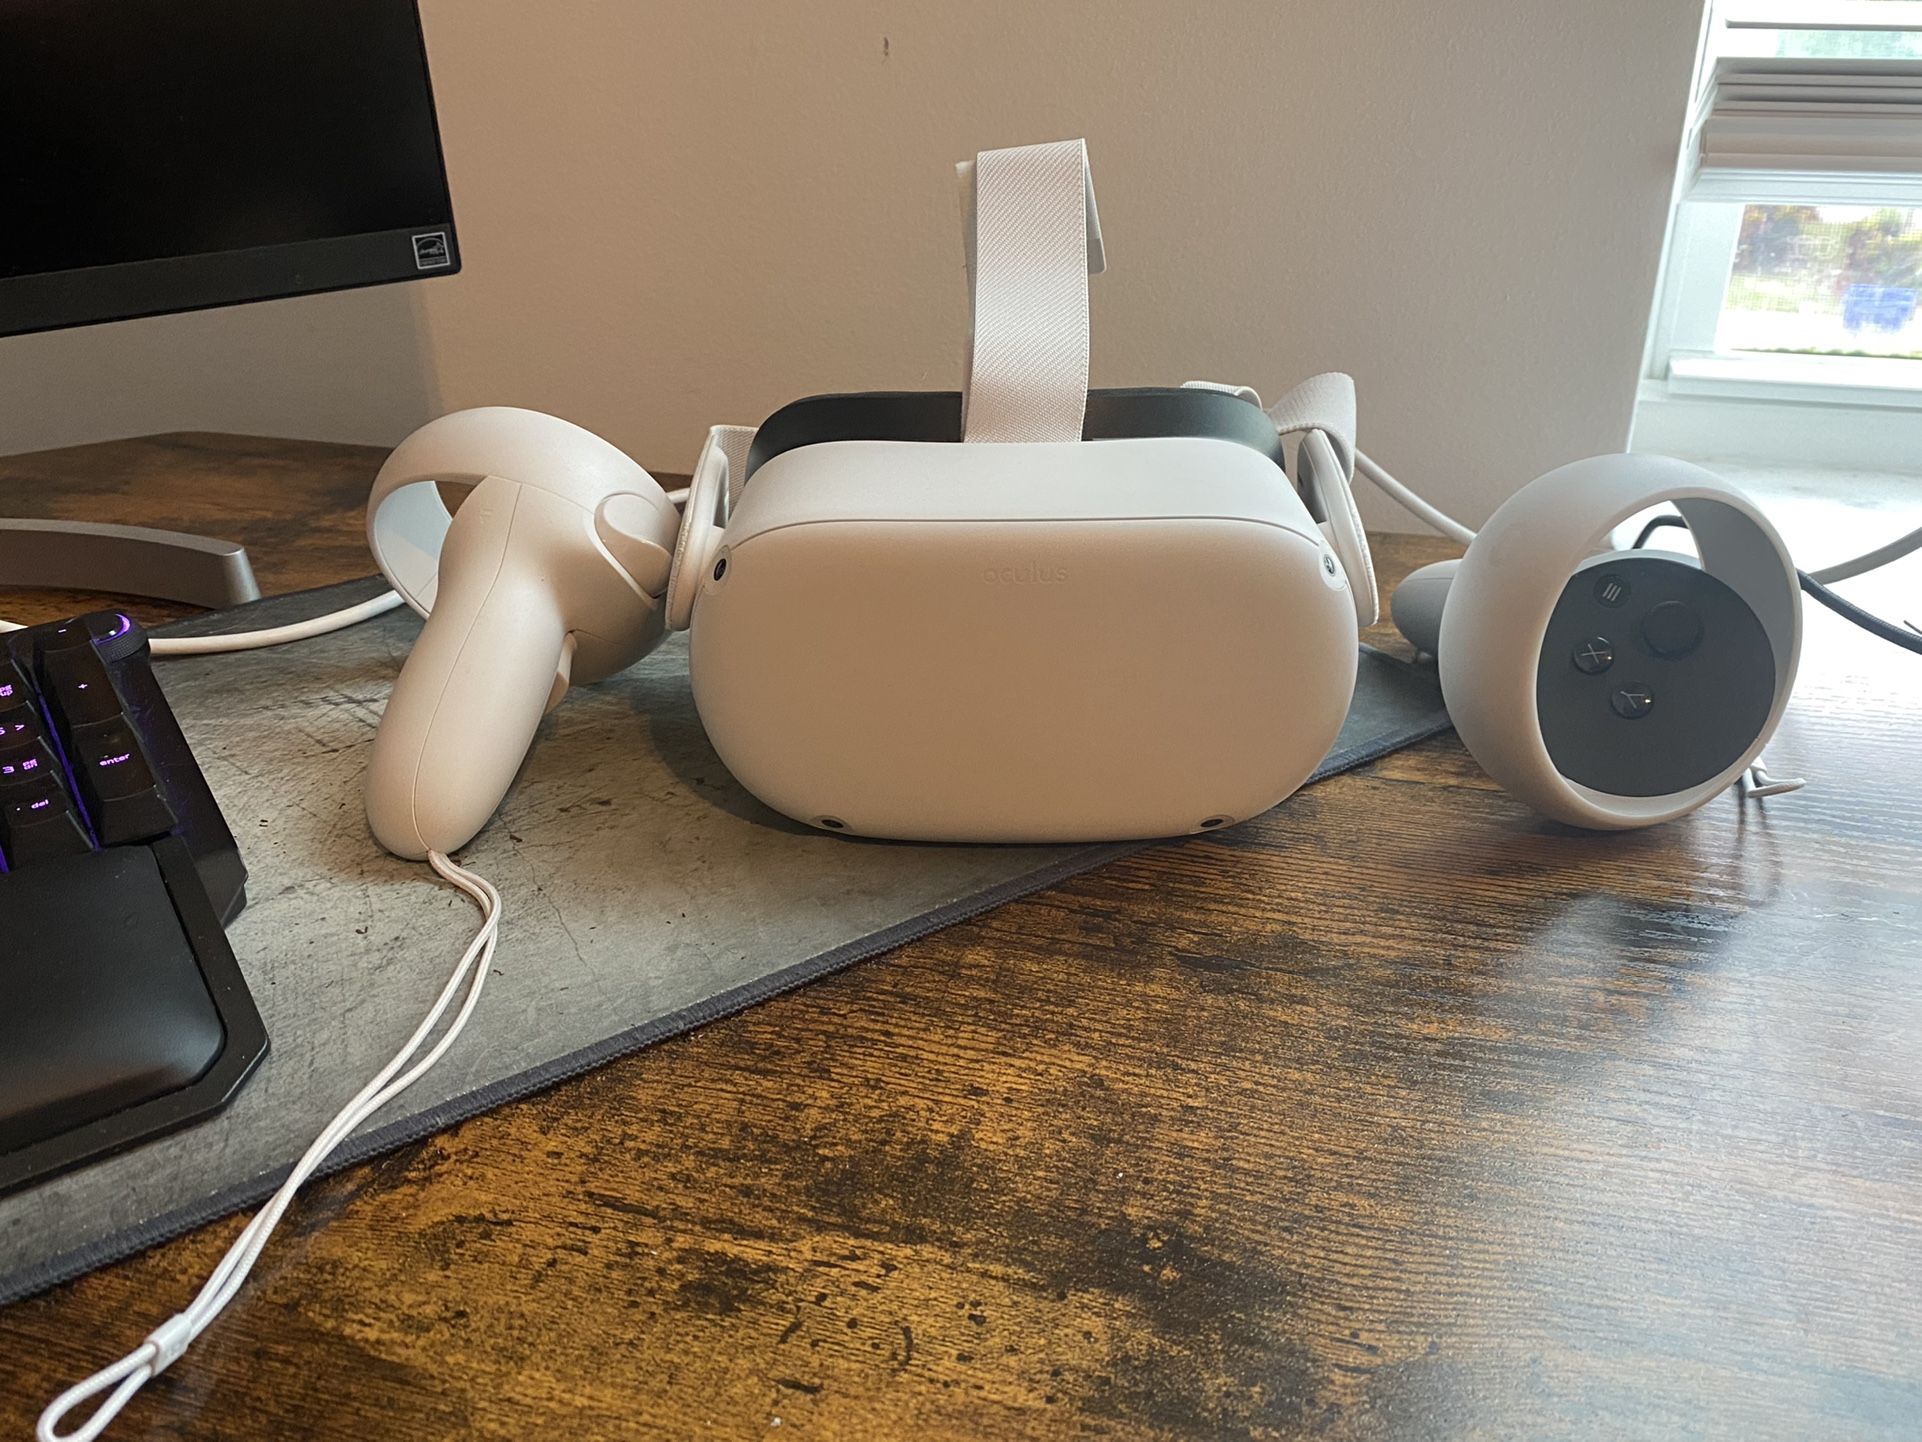 Oculus VR Head Set